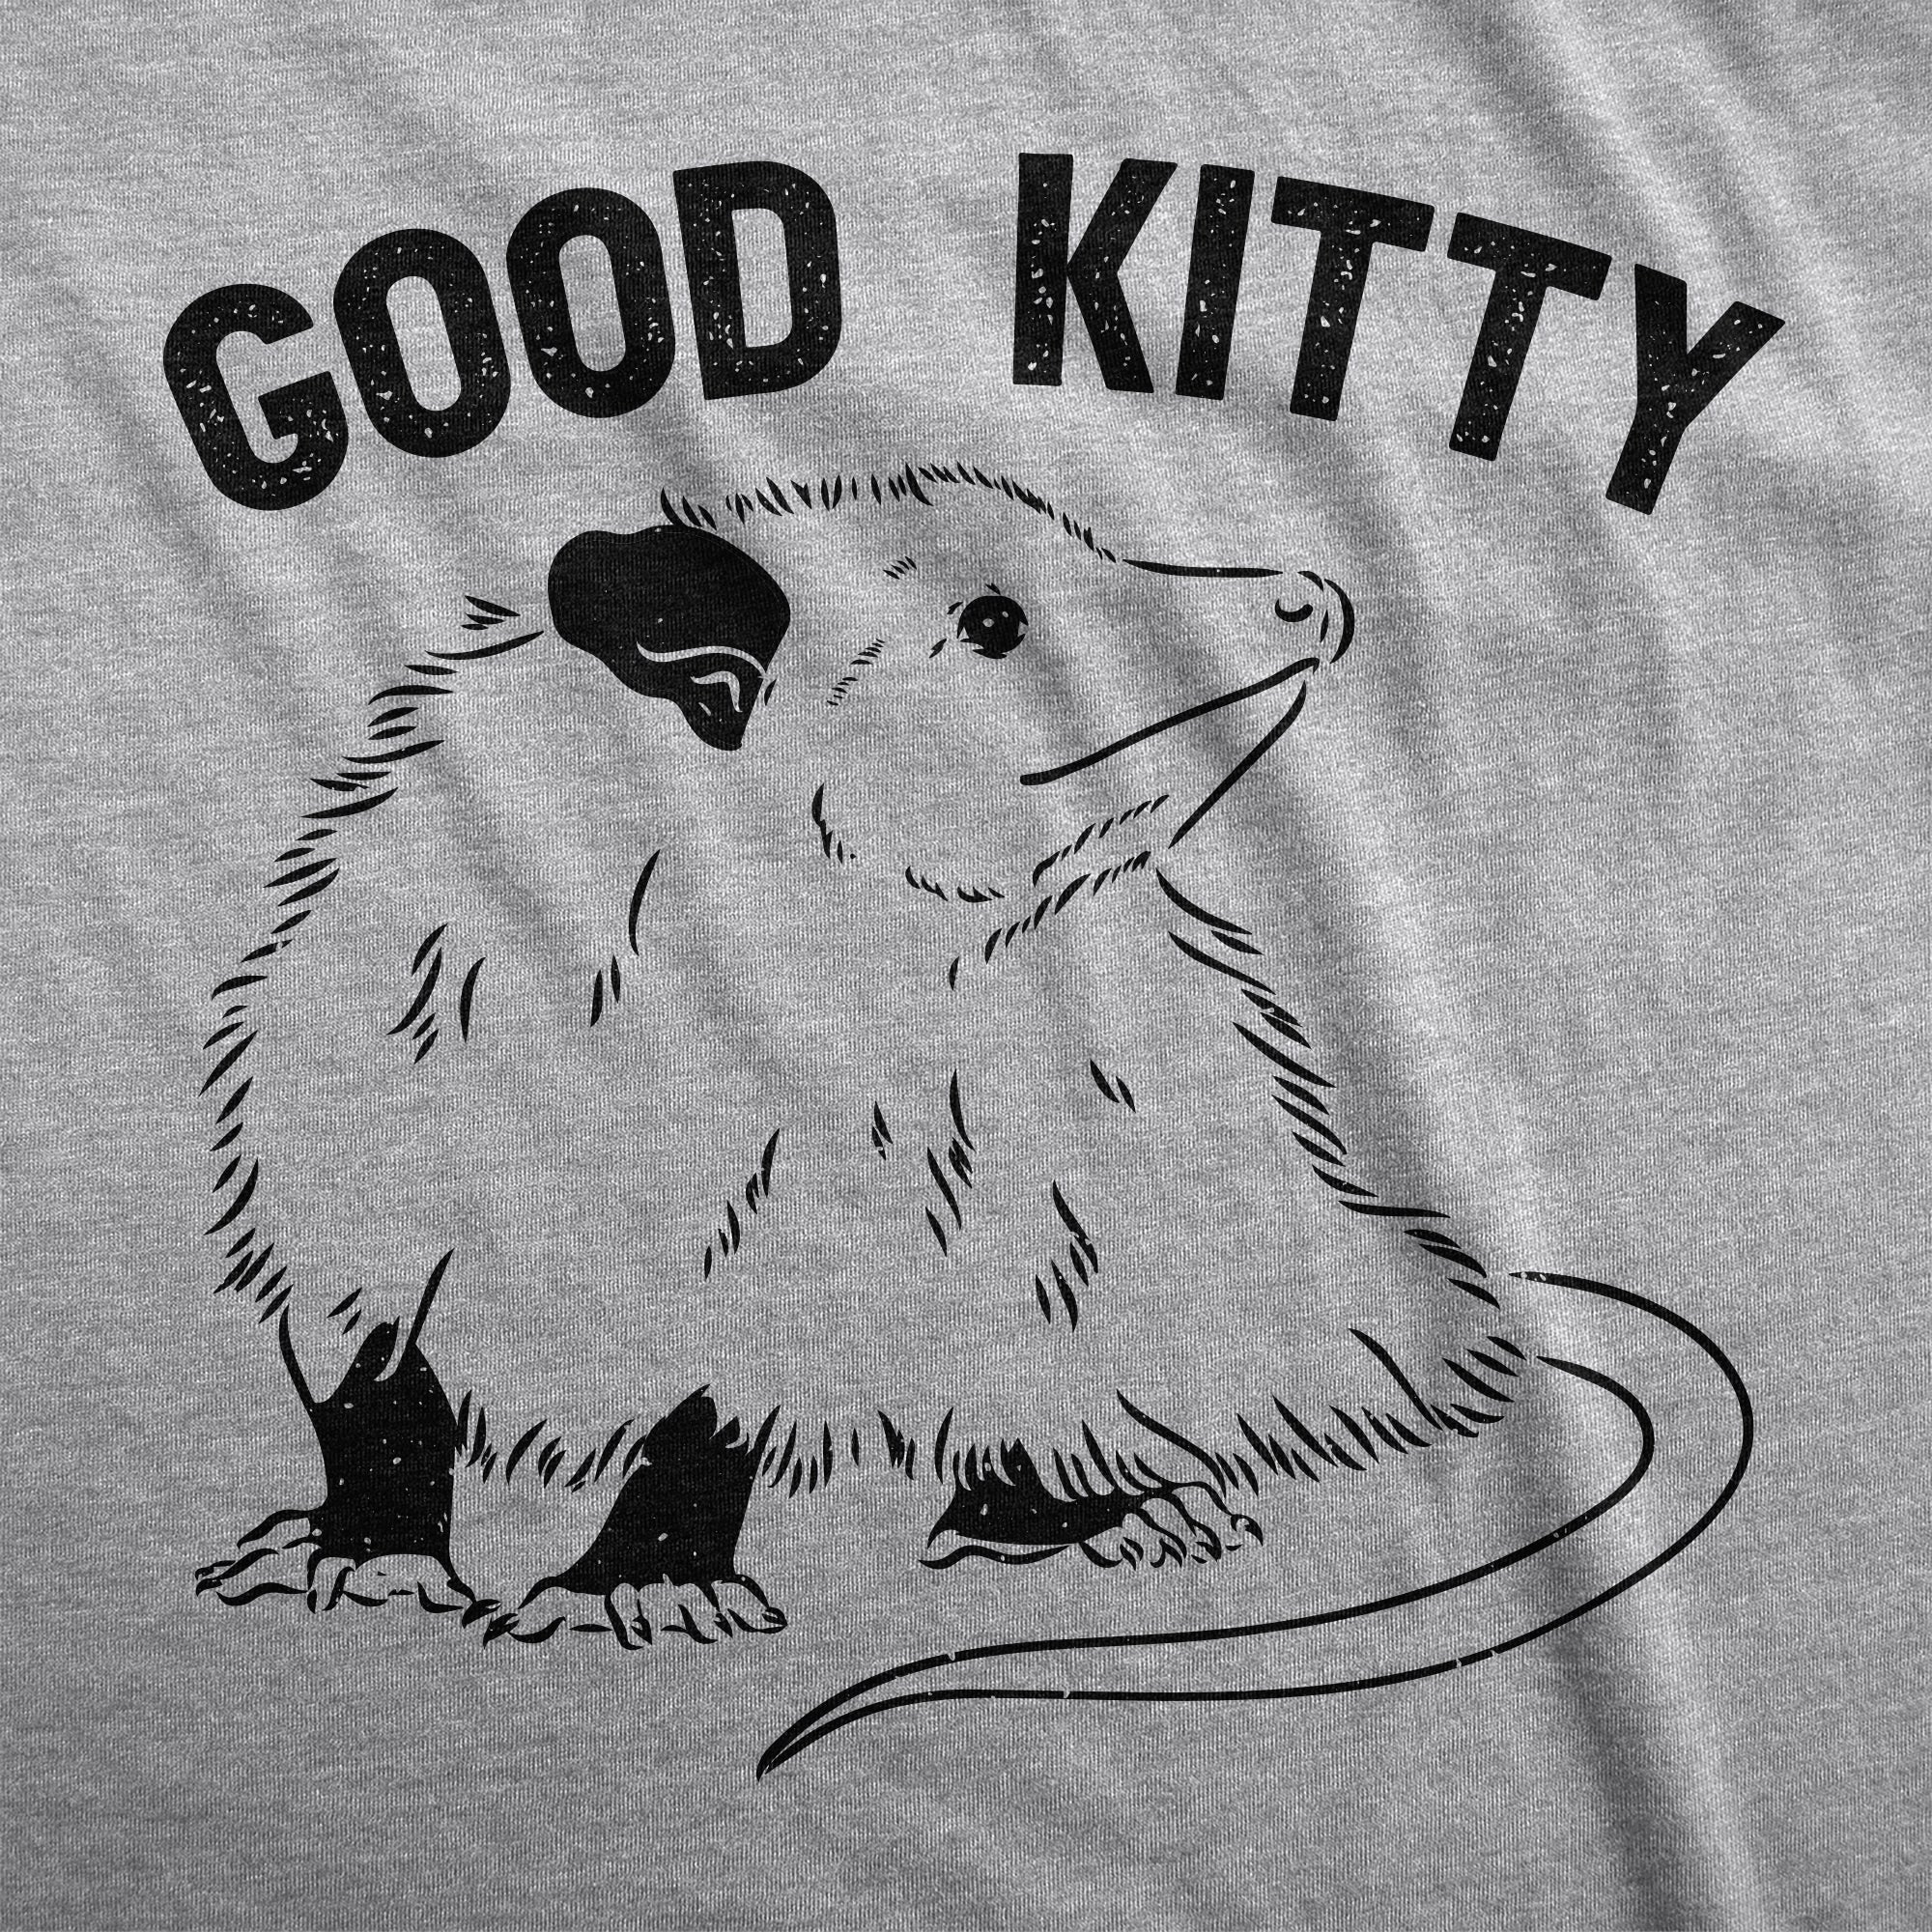 Funny Light Heather Grey - KITTY Good Kitty Mens T Shirt Nerdy Cat Animal Sarcastic Tee